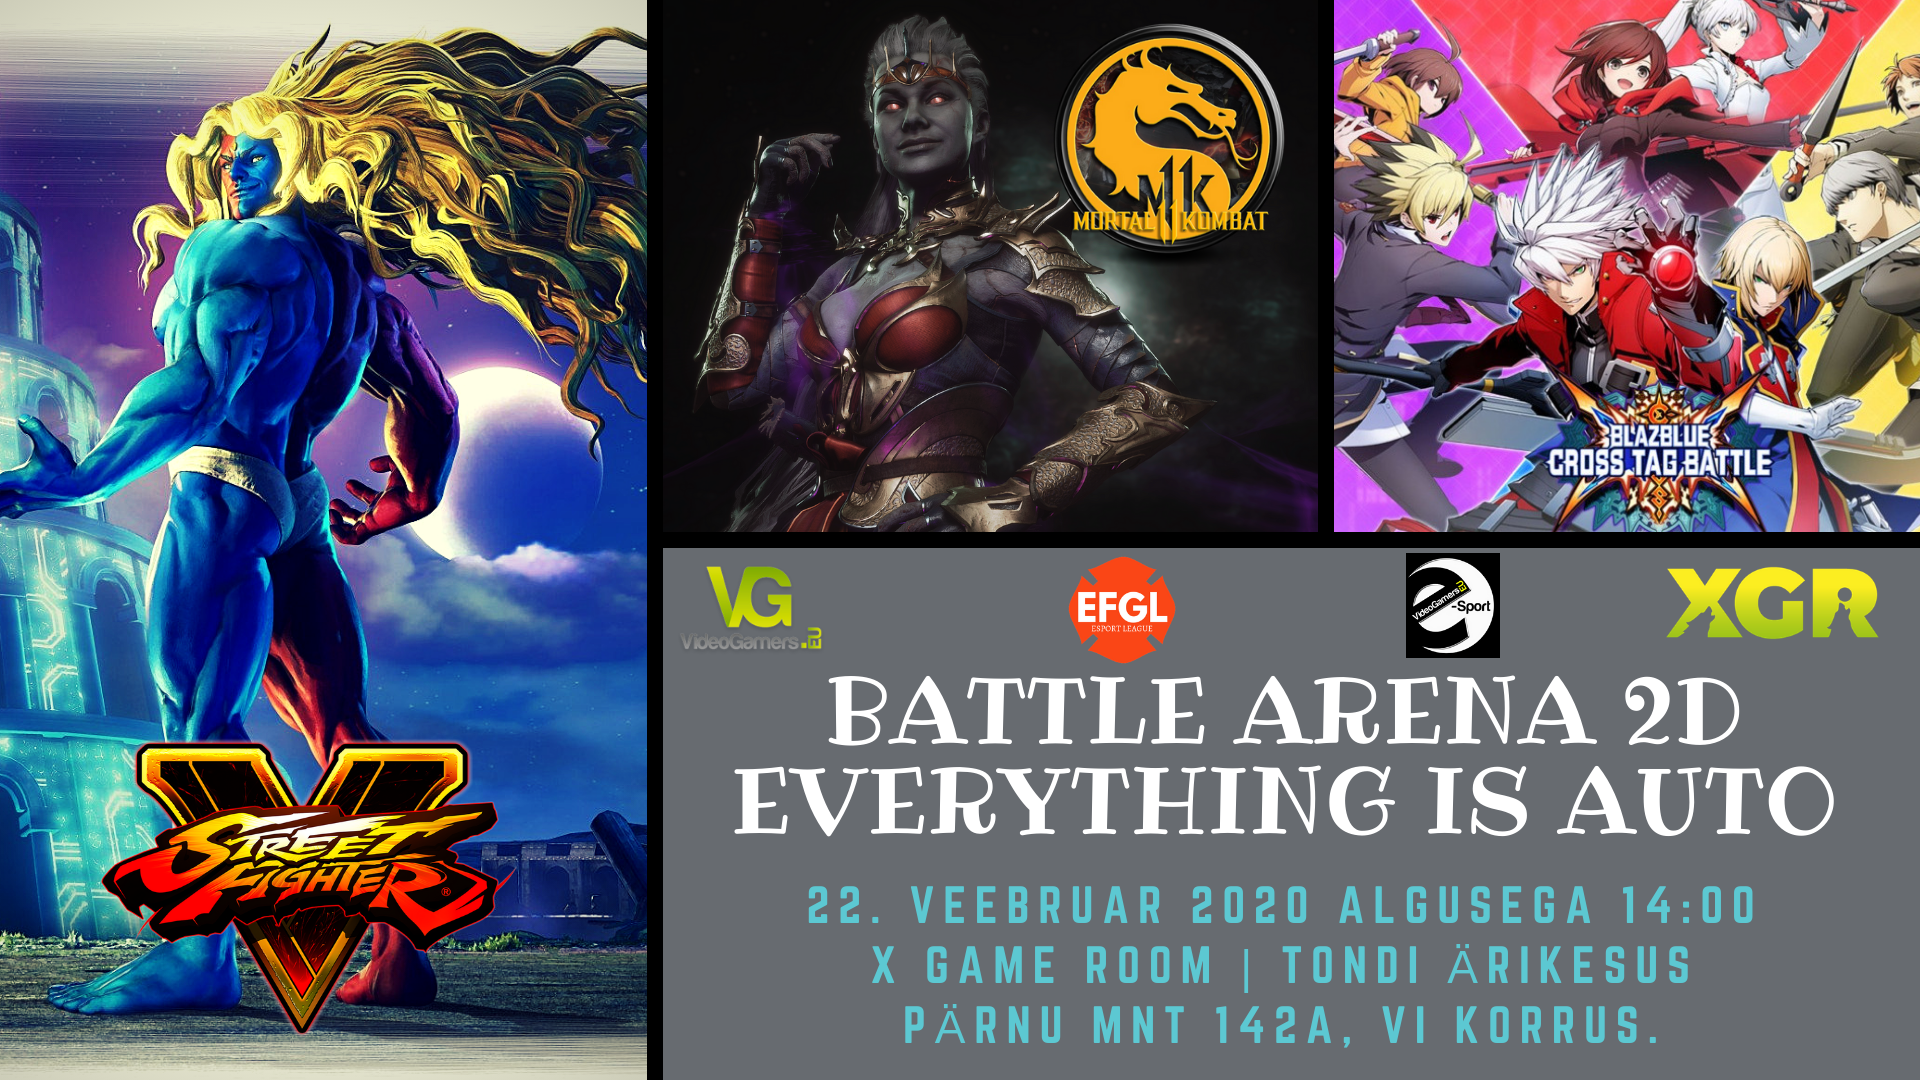 Next offline event is called Battle Arena 2D